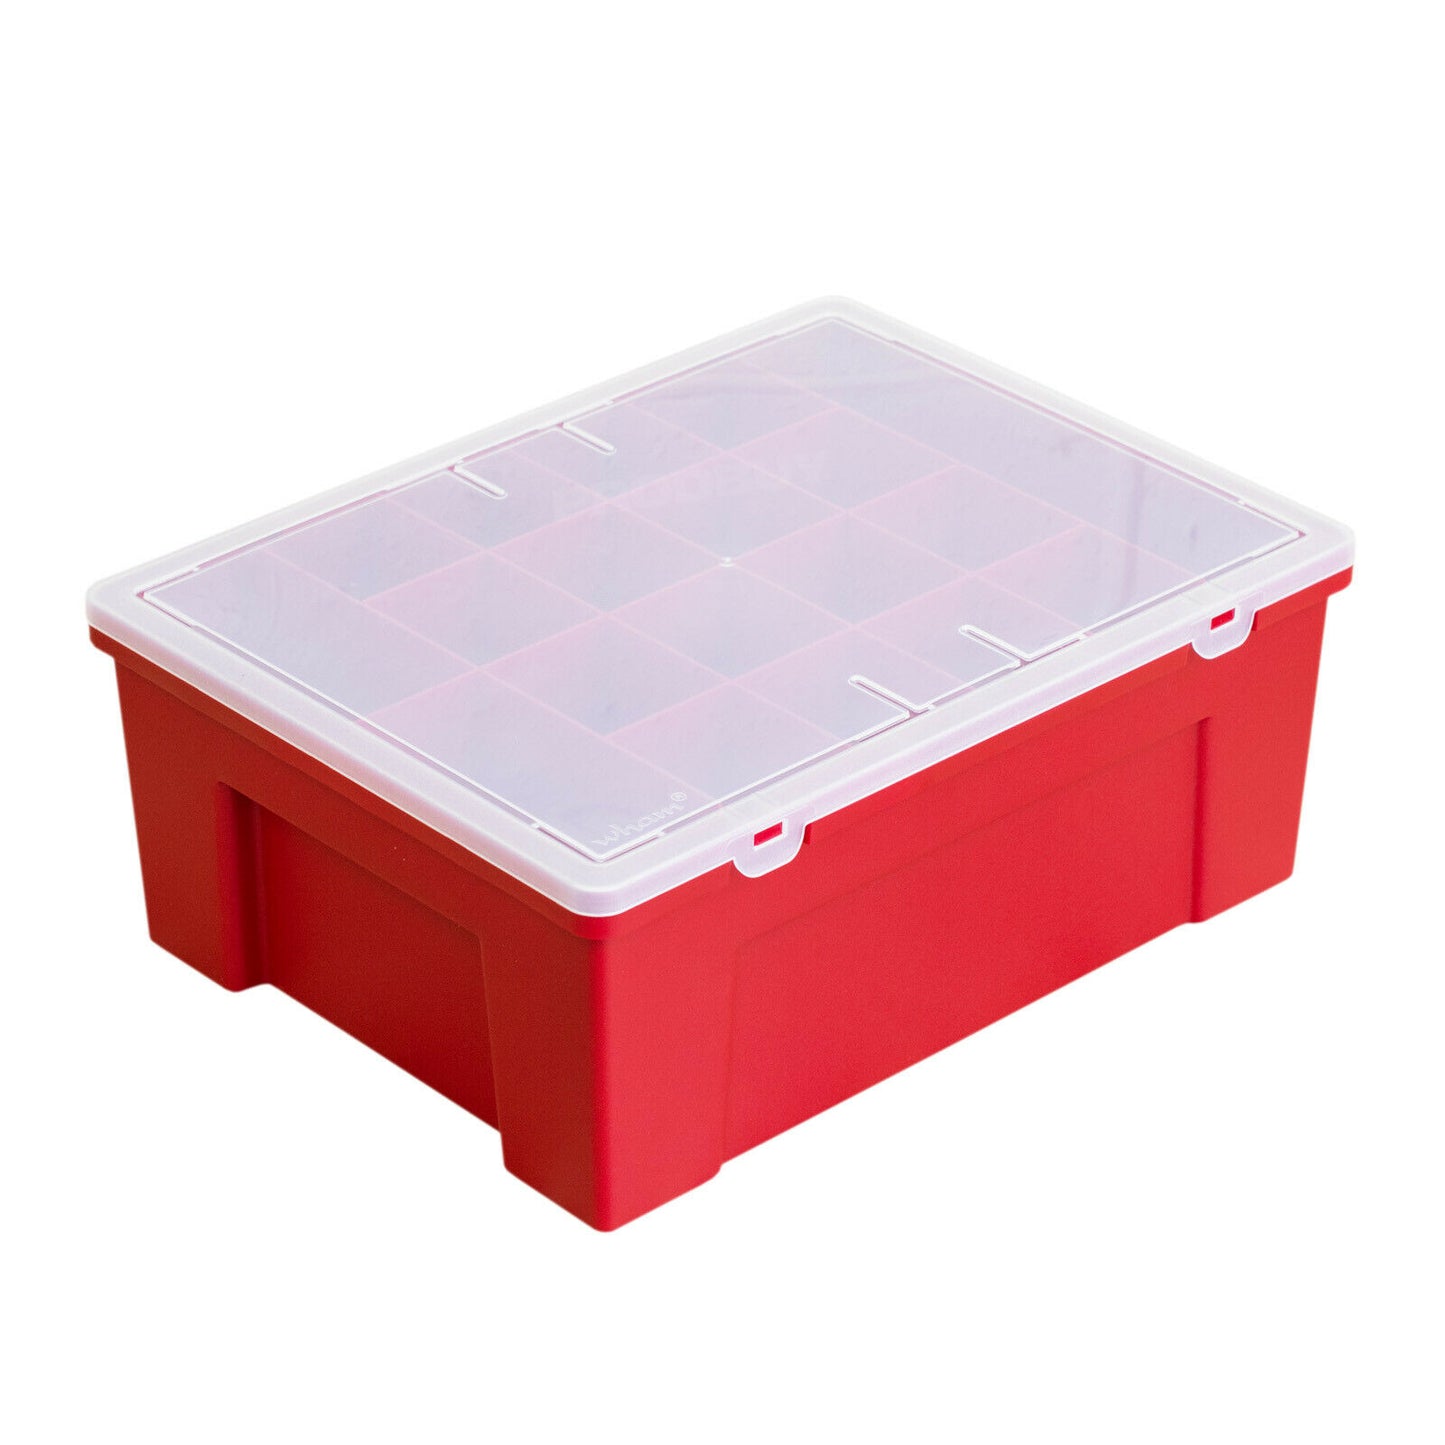 19 Part Rectangular Red Plastic Organiser Box Storage Caddy